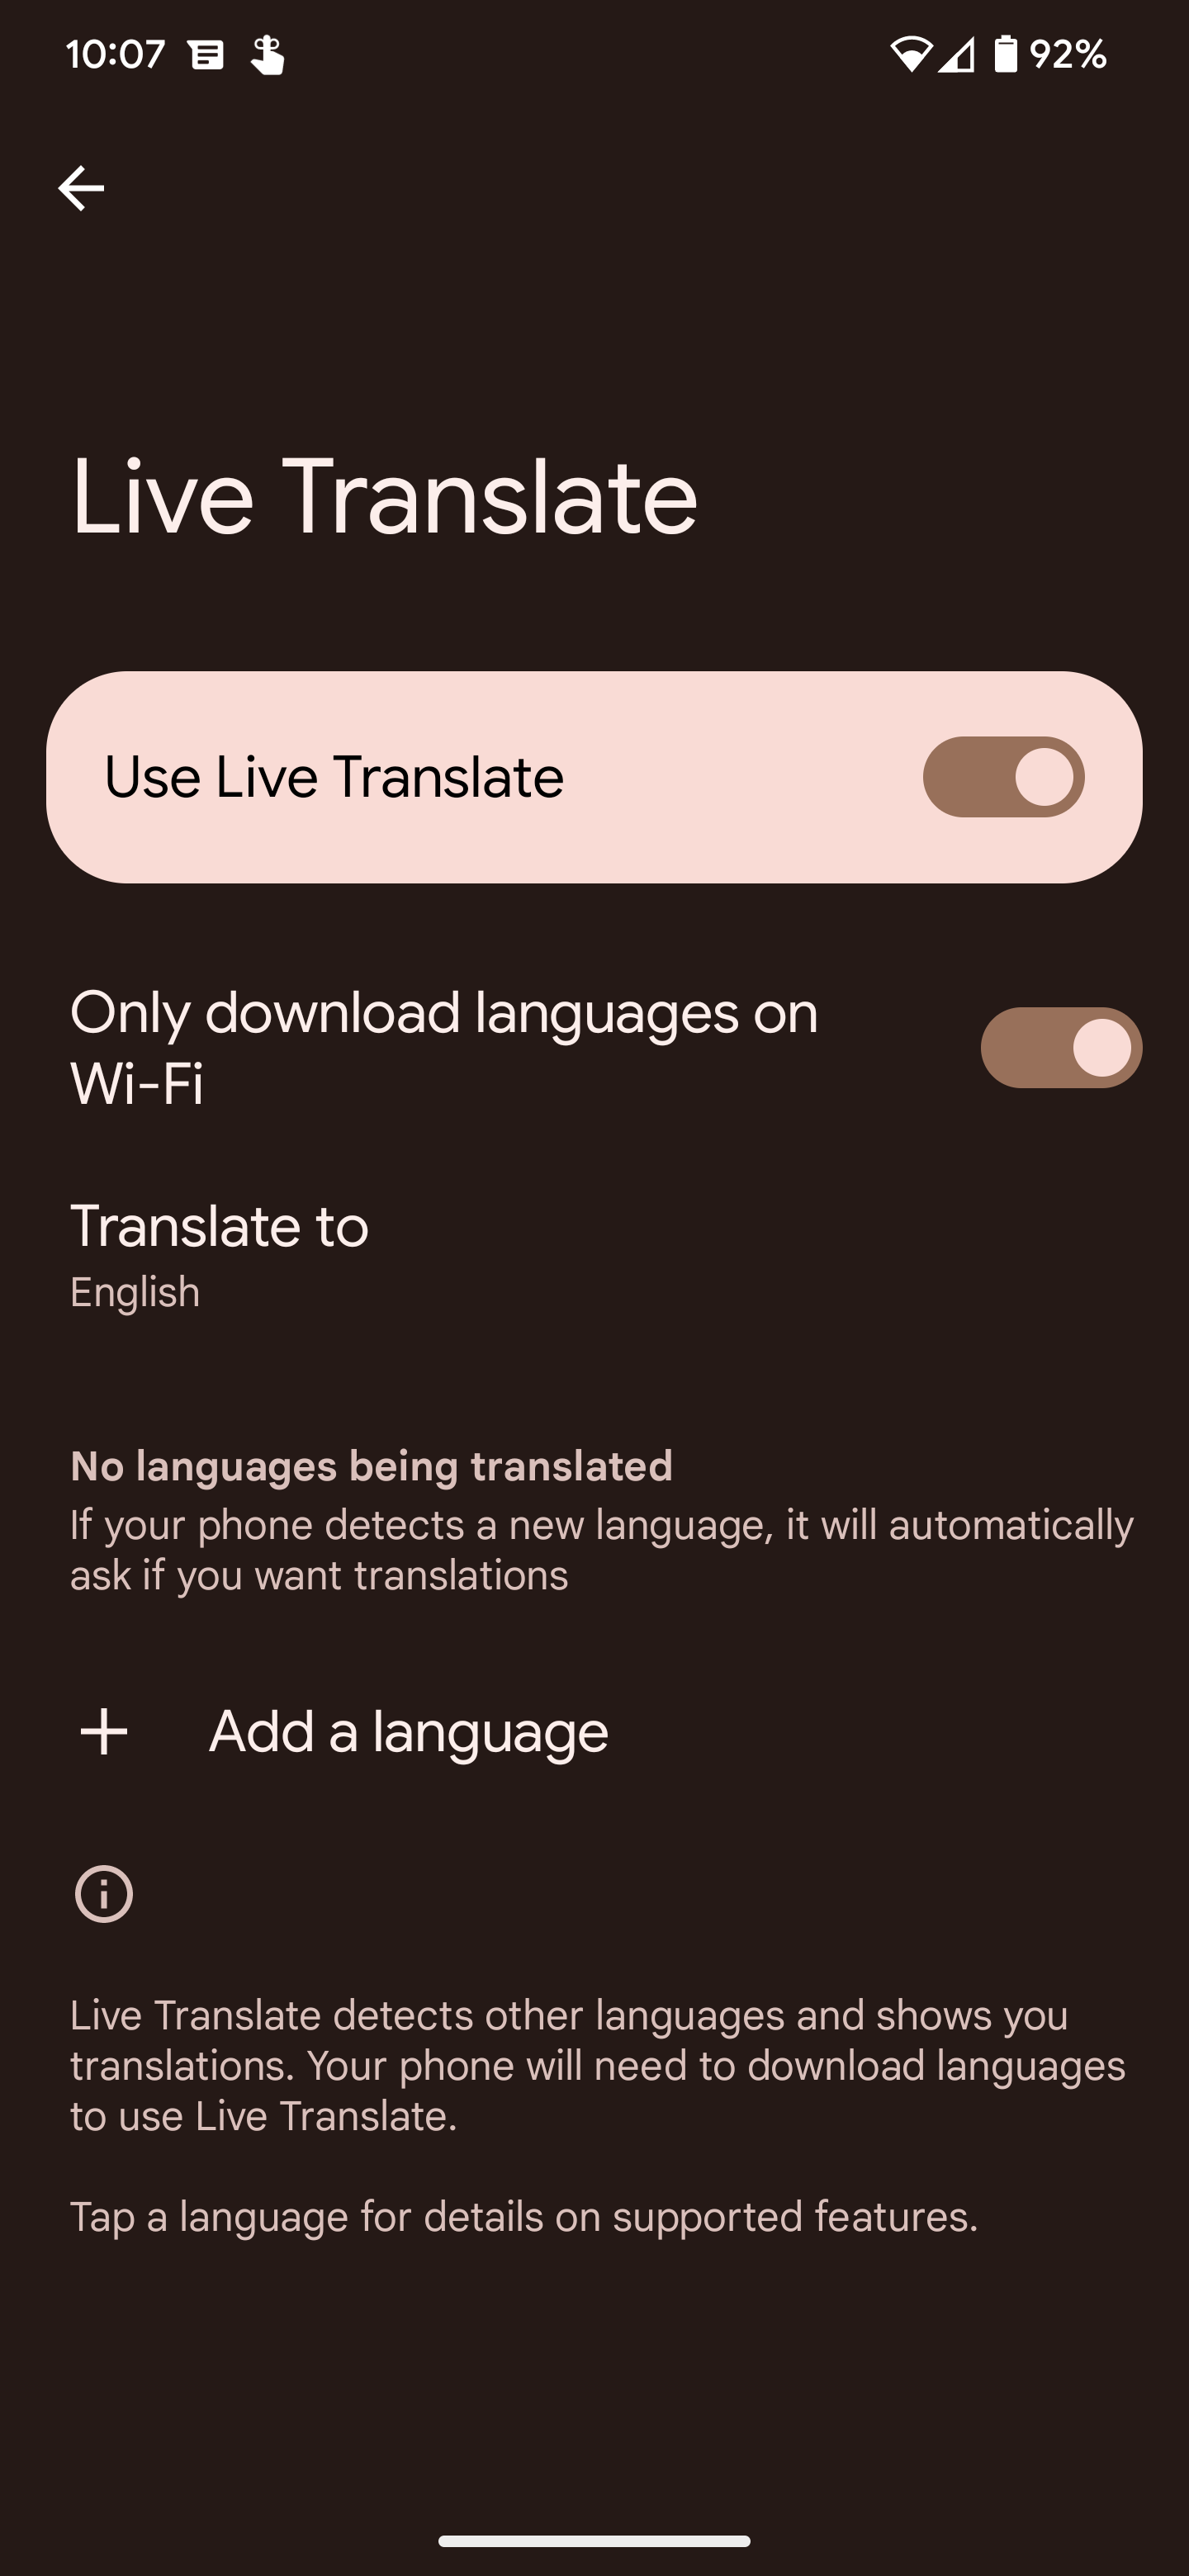 The Live Translate settings on a Google Pixel